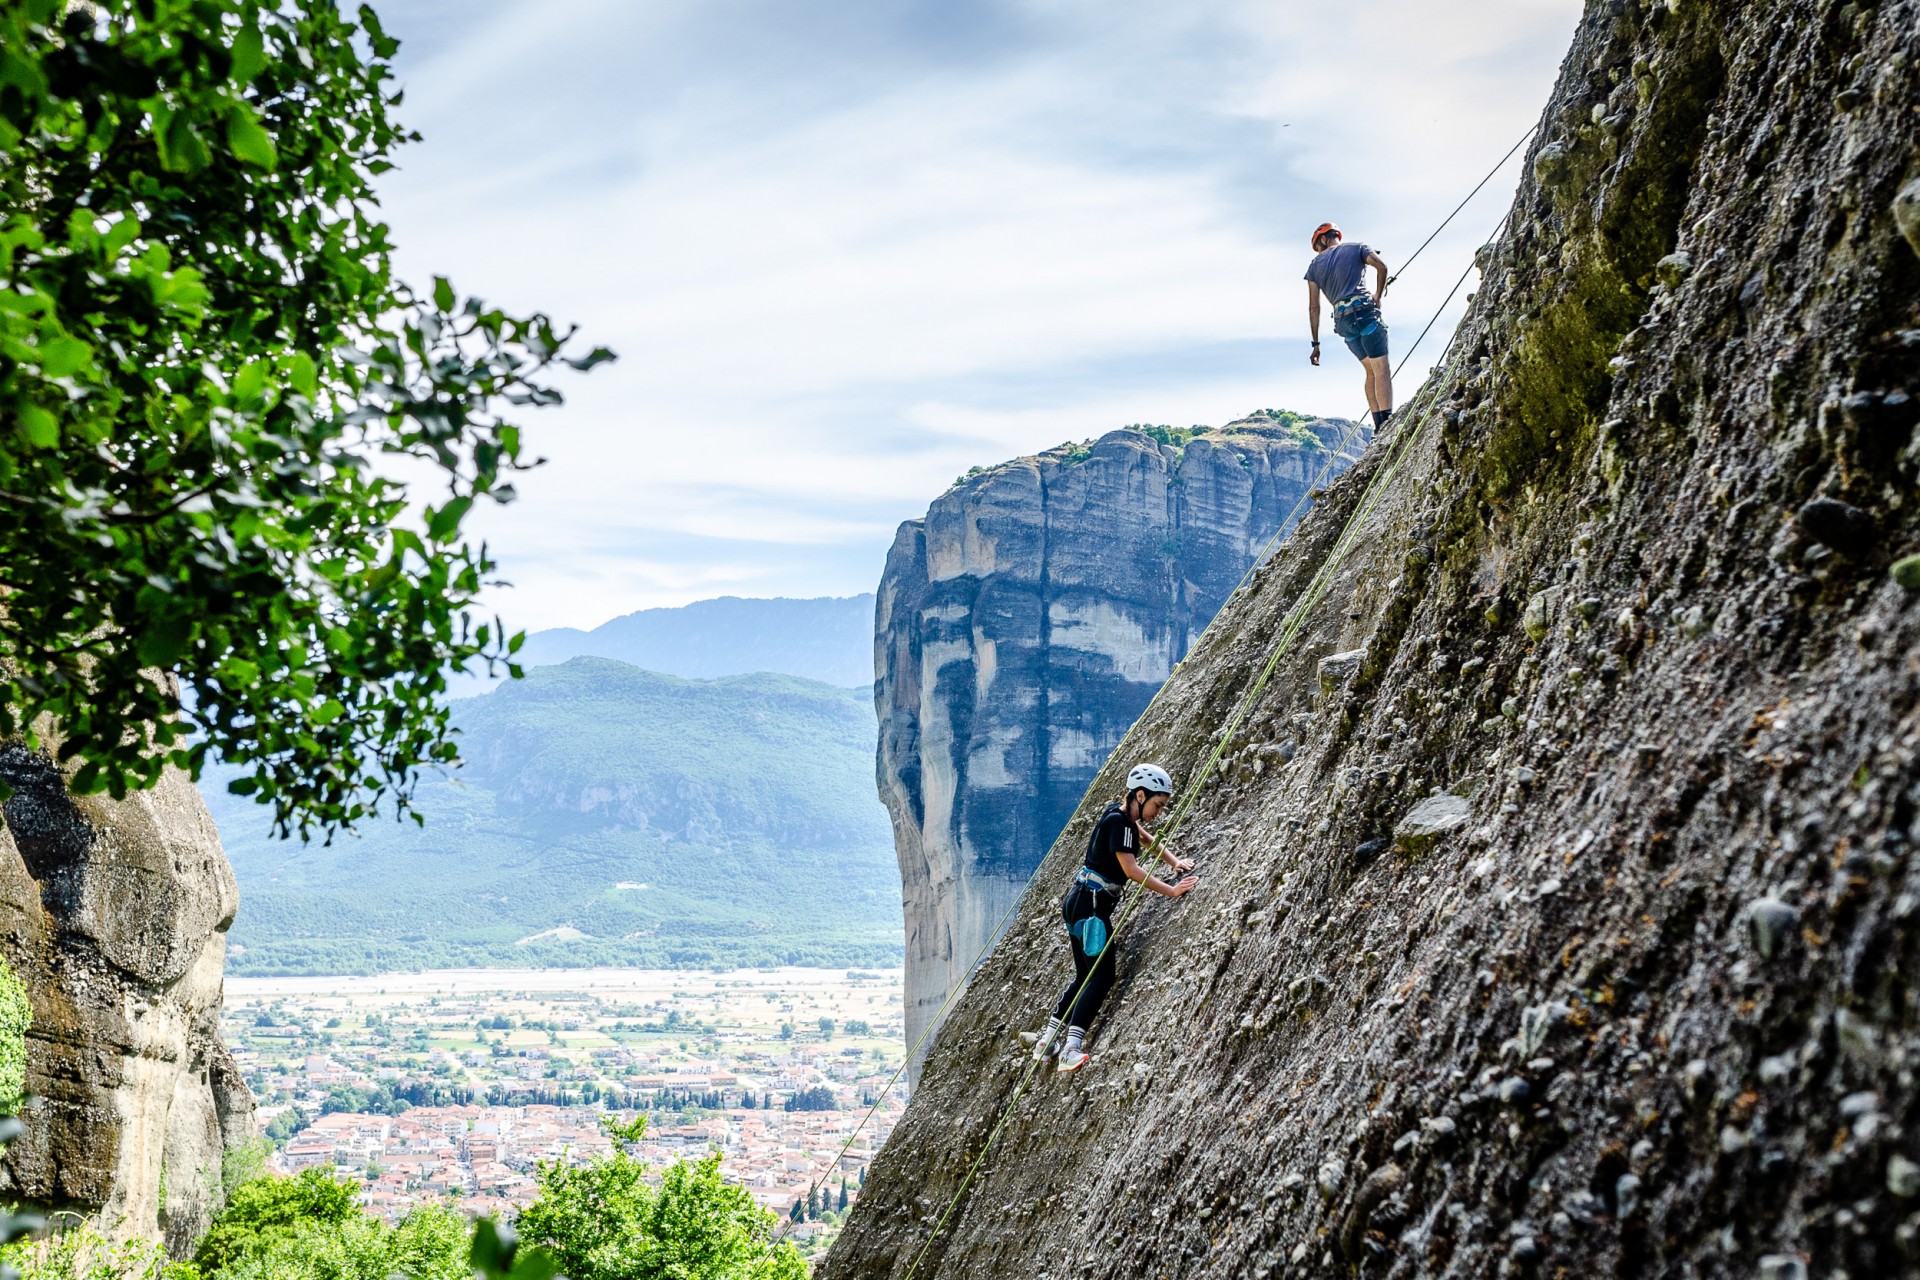 Meteora Rock Climbing for beginners or intermediate rock climbers!